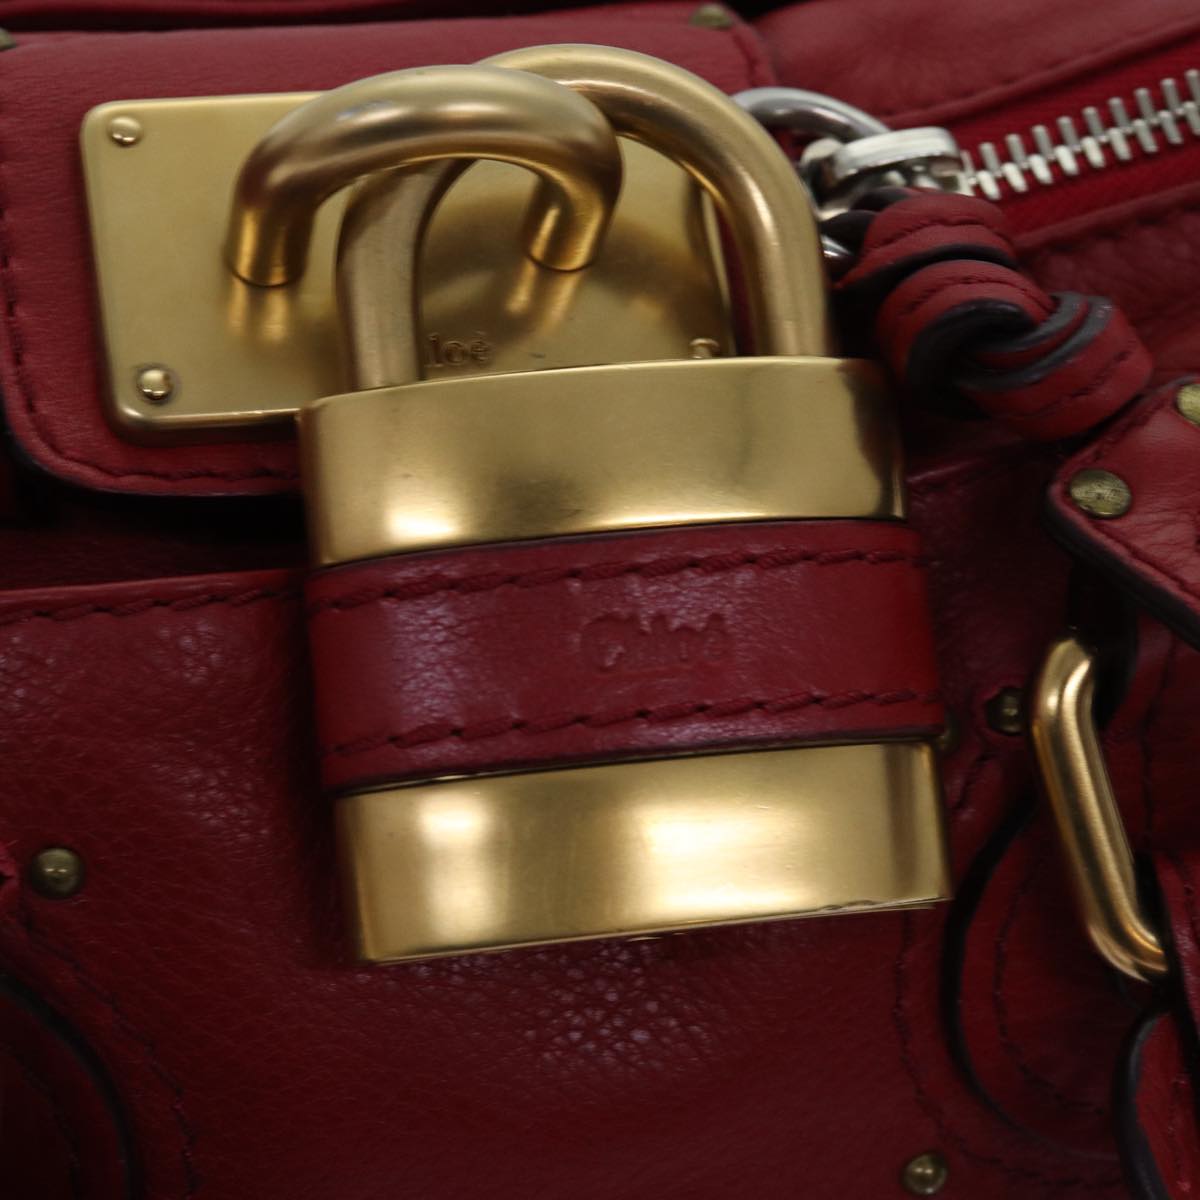 Chloe Paddington Mini Hand Bag Leather Red Auth ep4030